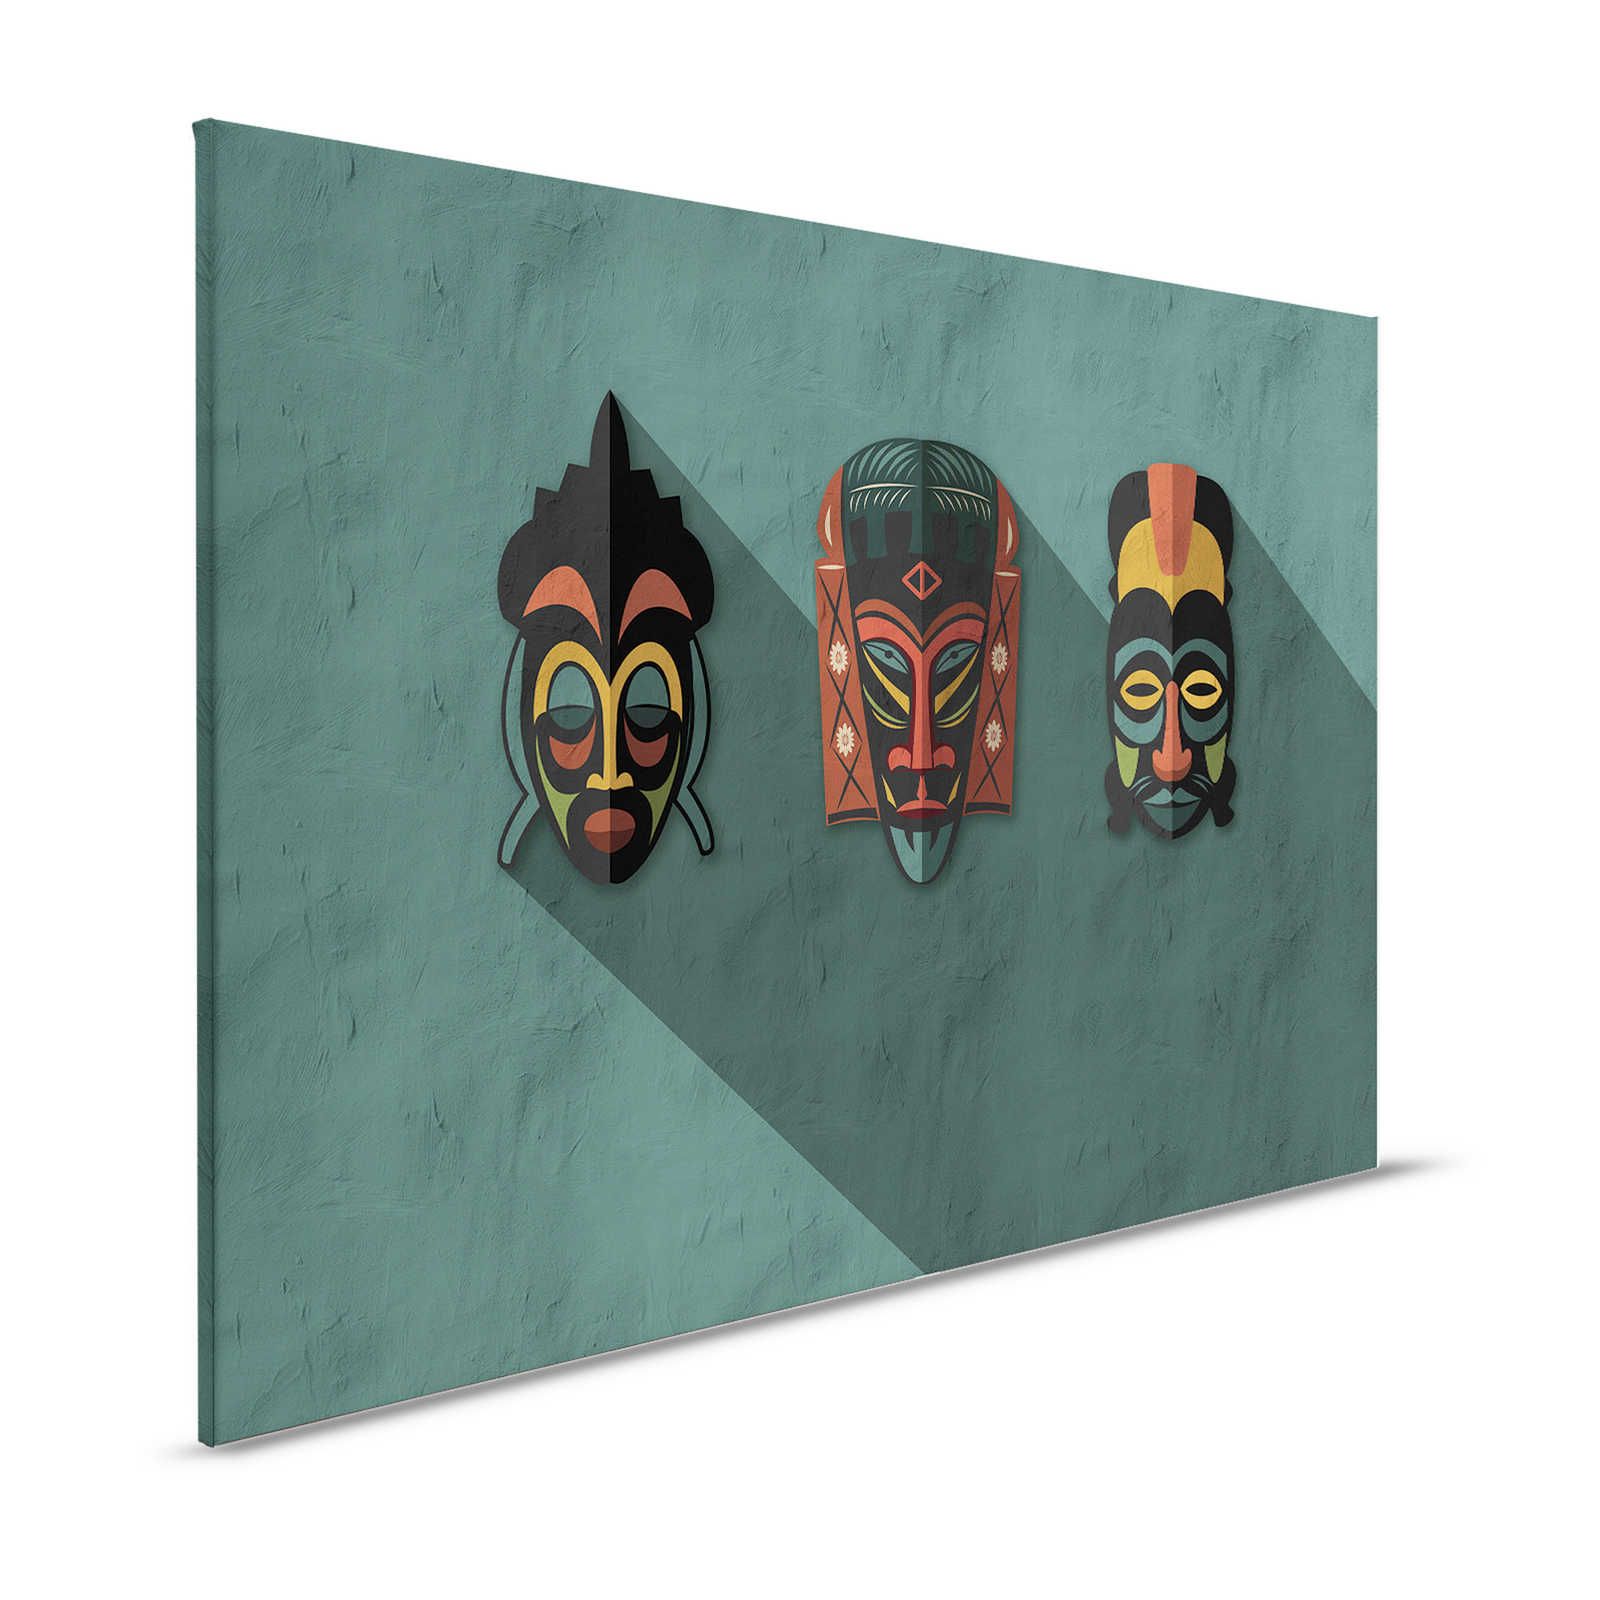 Zulu 3 - Canvas painting Petrol Africa Masks Zulu Design - 1.20 m x 0.80 m
